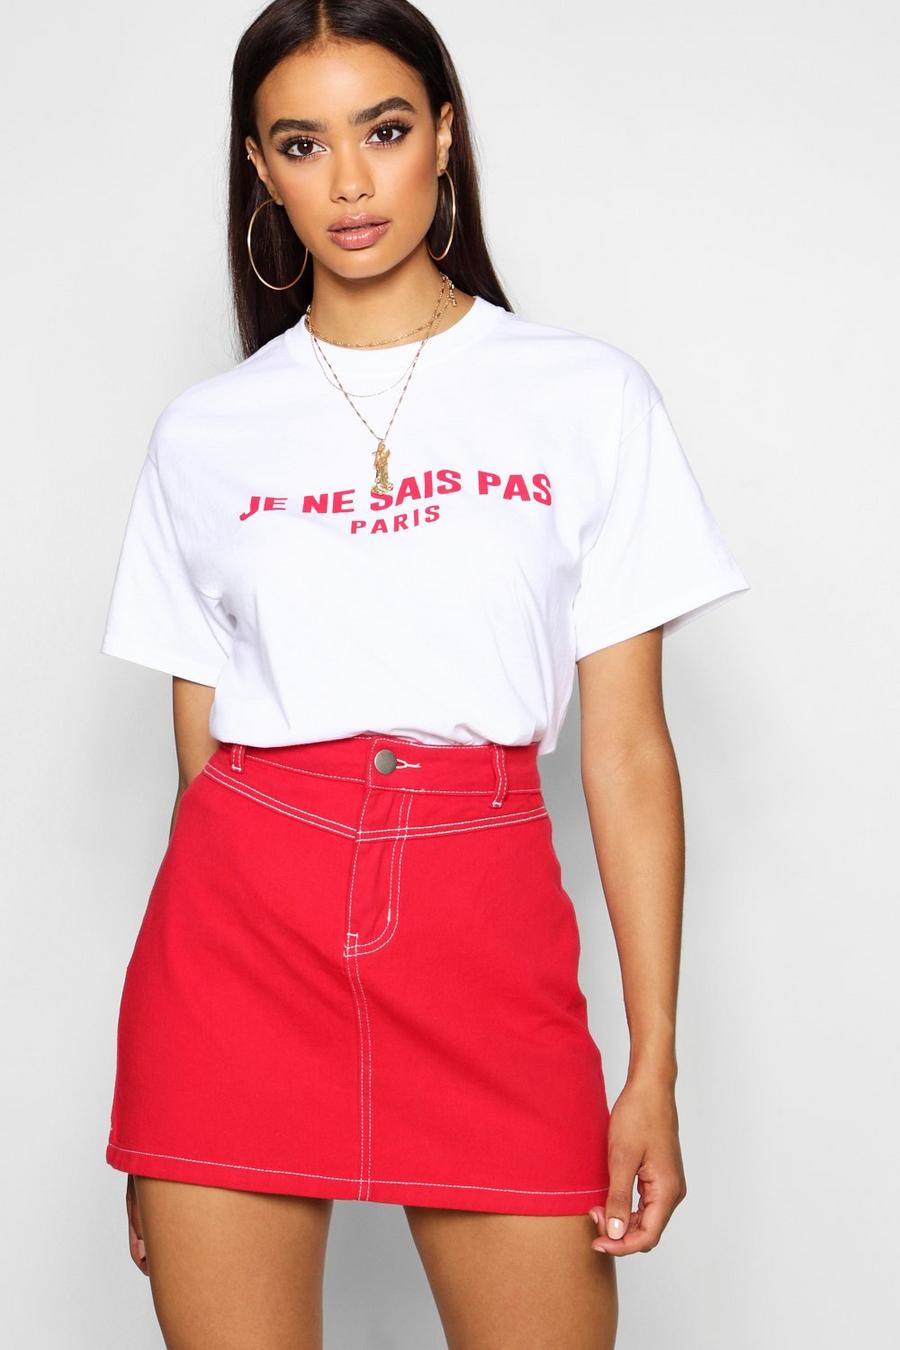 Camiseta con eslogan “Je Ne Sais Pas” image number 1